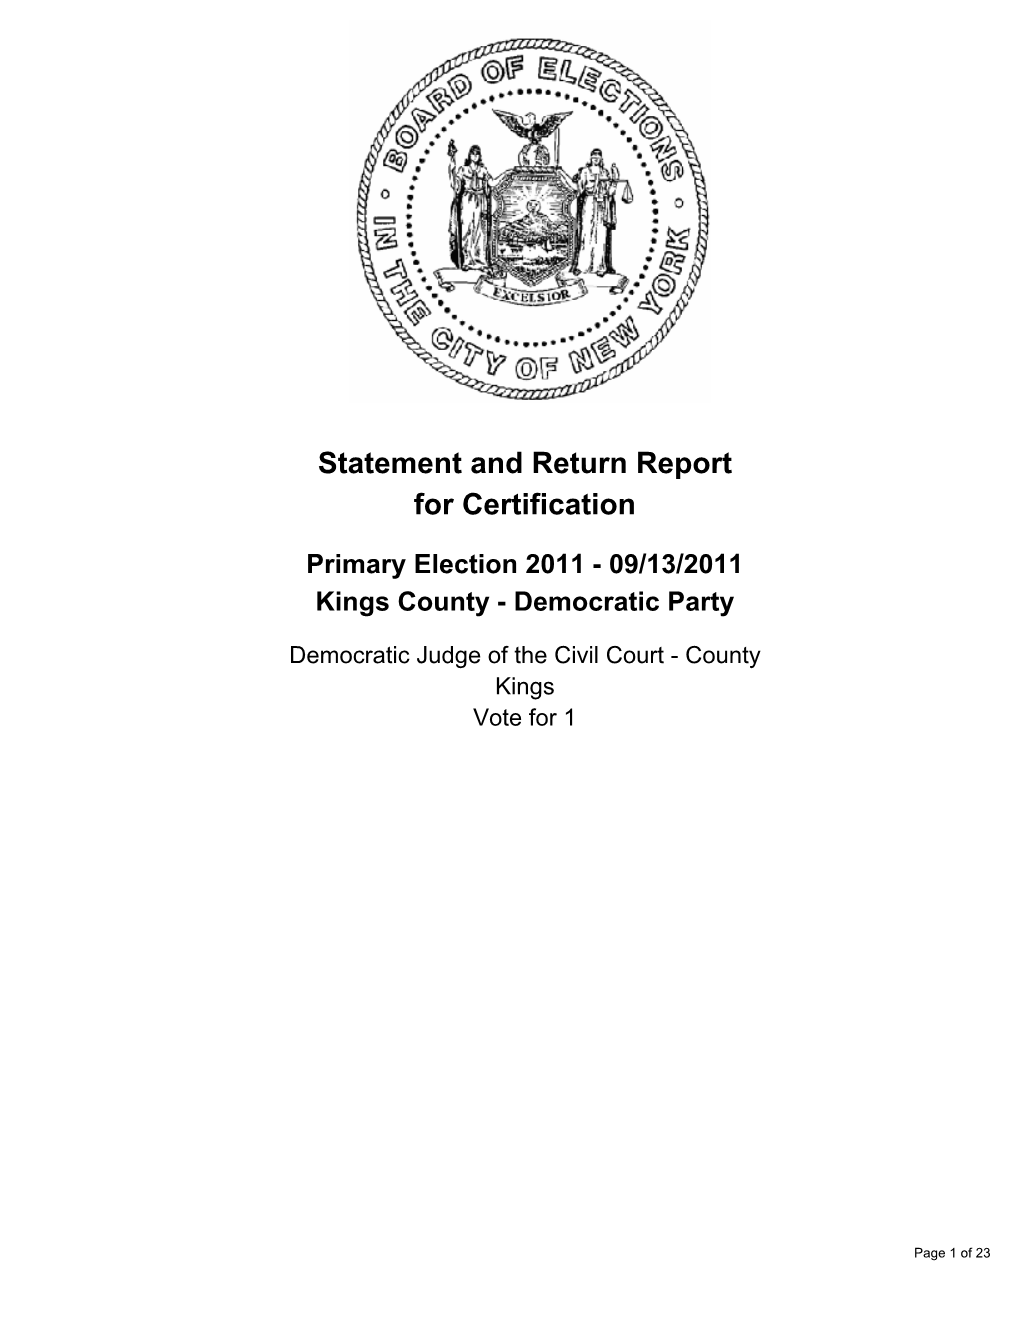 Kings Dem Countywide Civil Court Recap(Pdf)